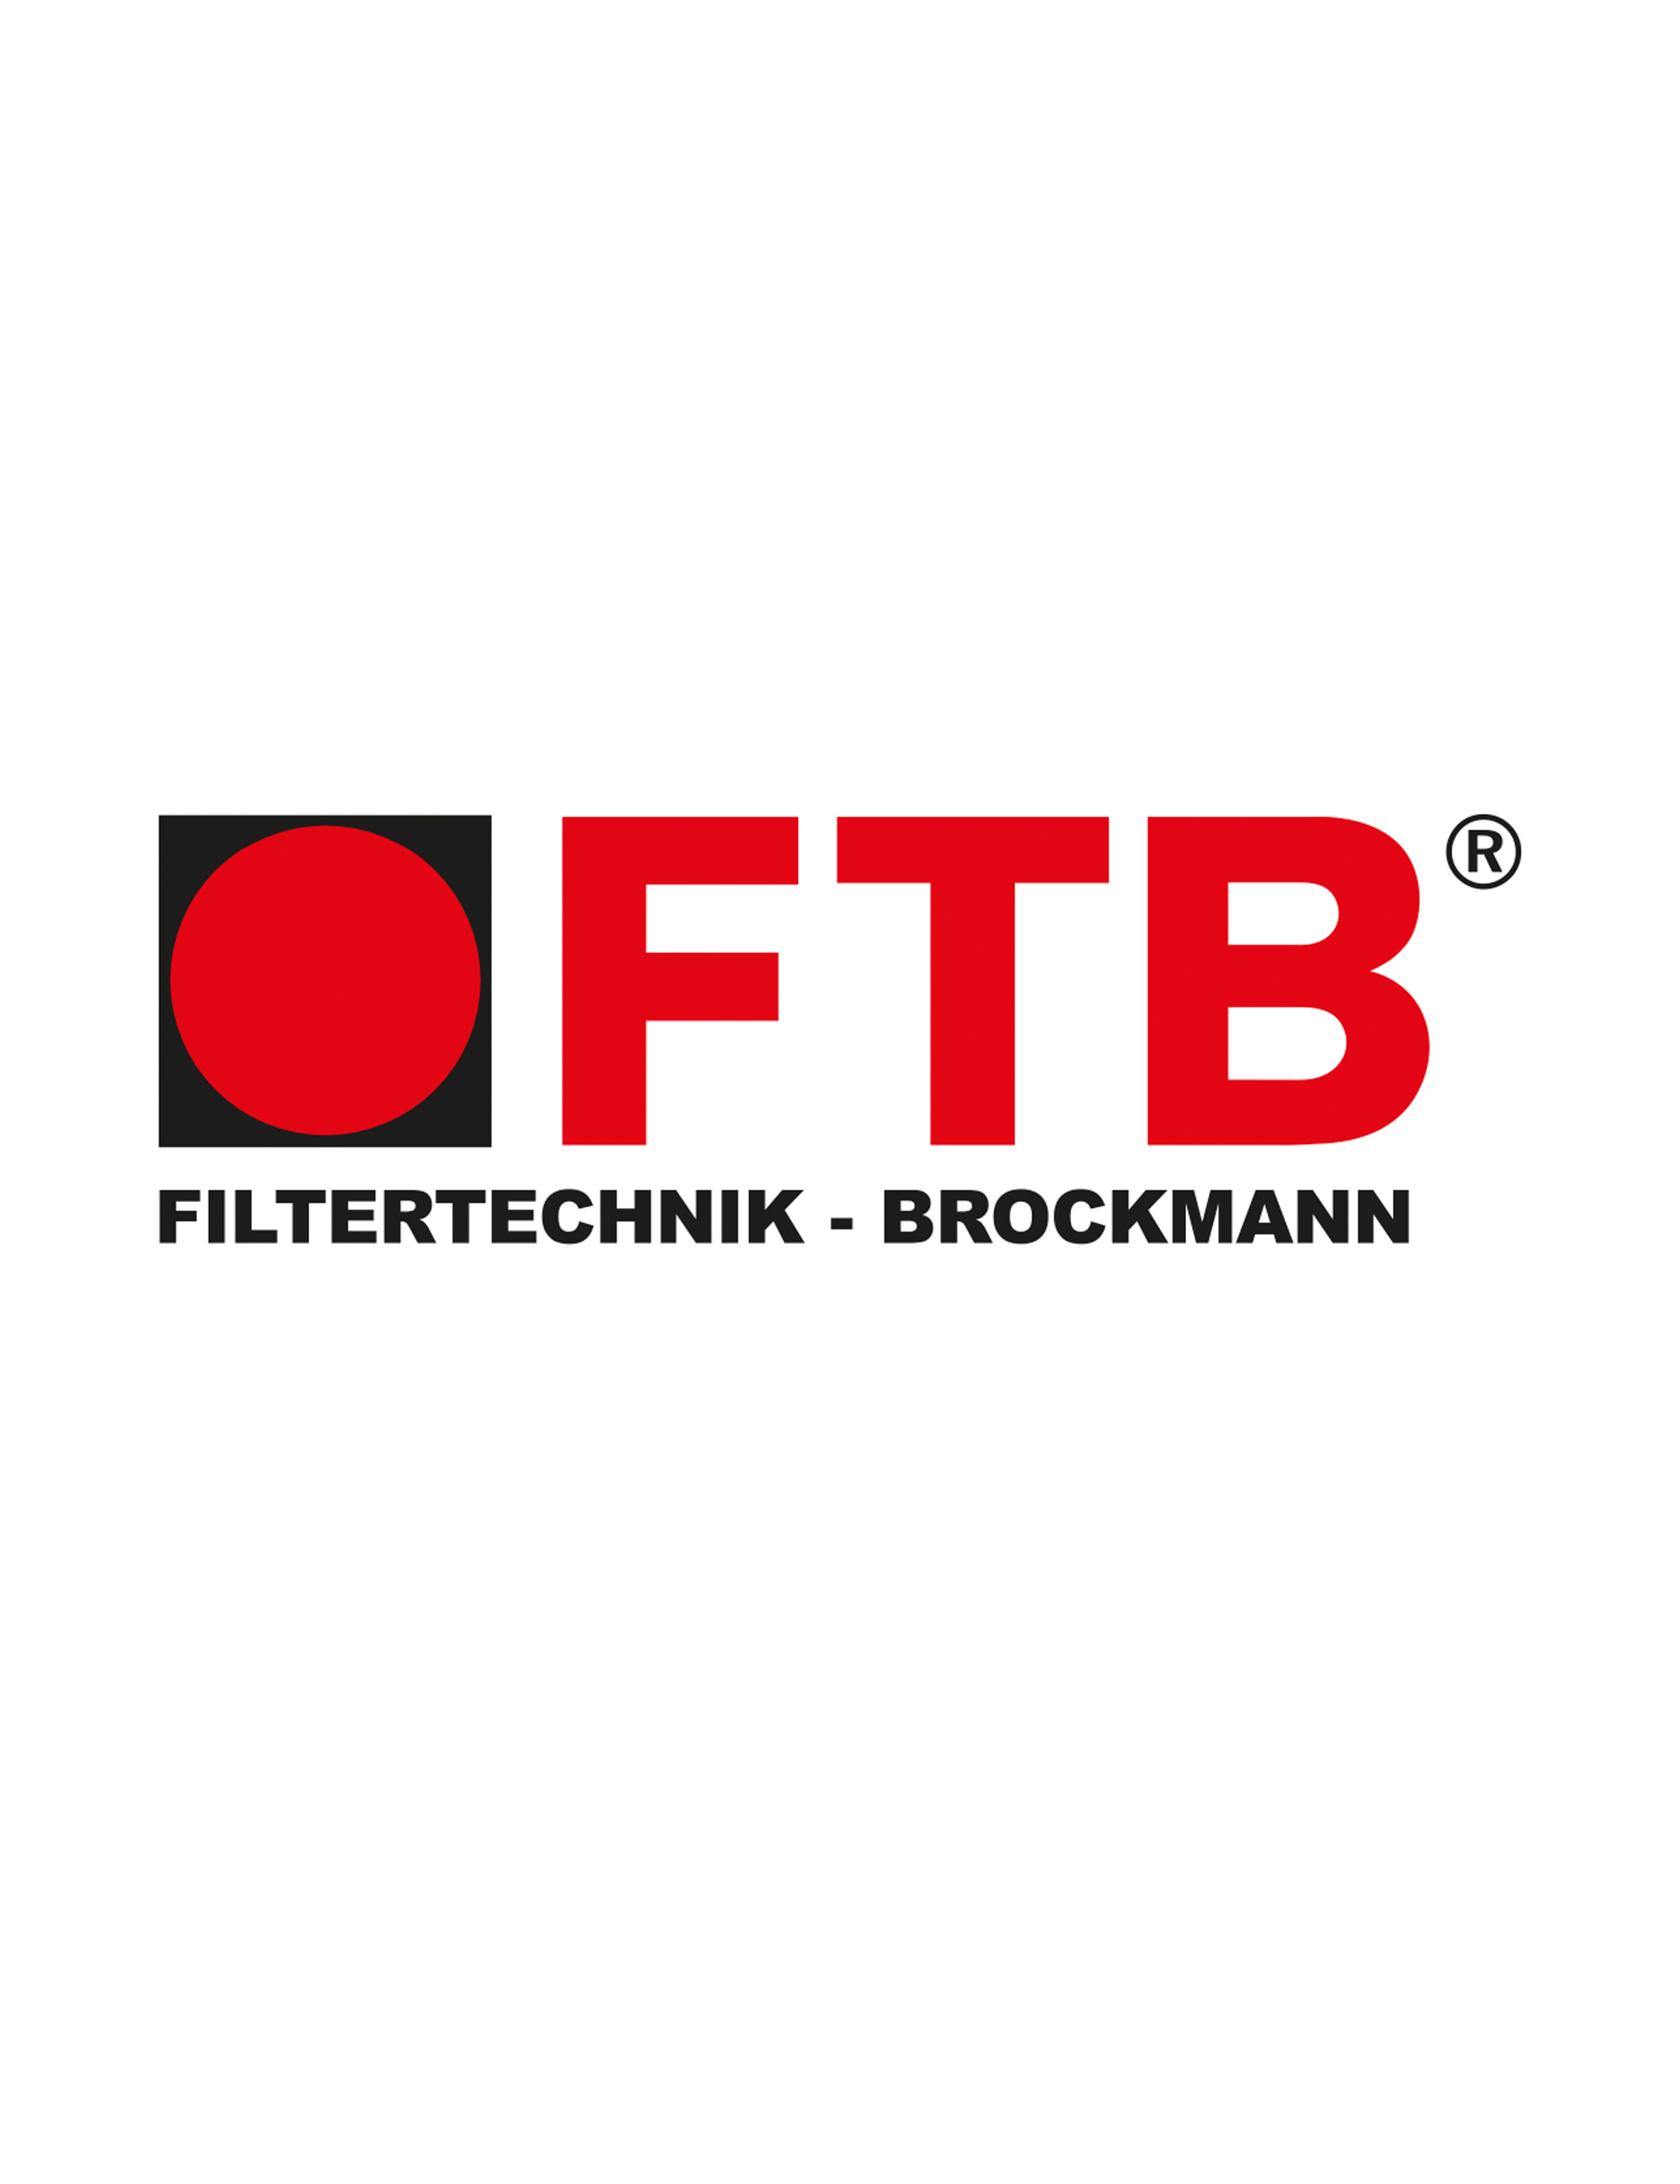 ftb filtertechnik brockmann corporate identity logo jos büro für Gestaltung Würzburg